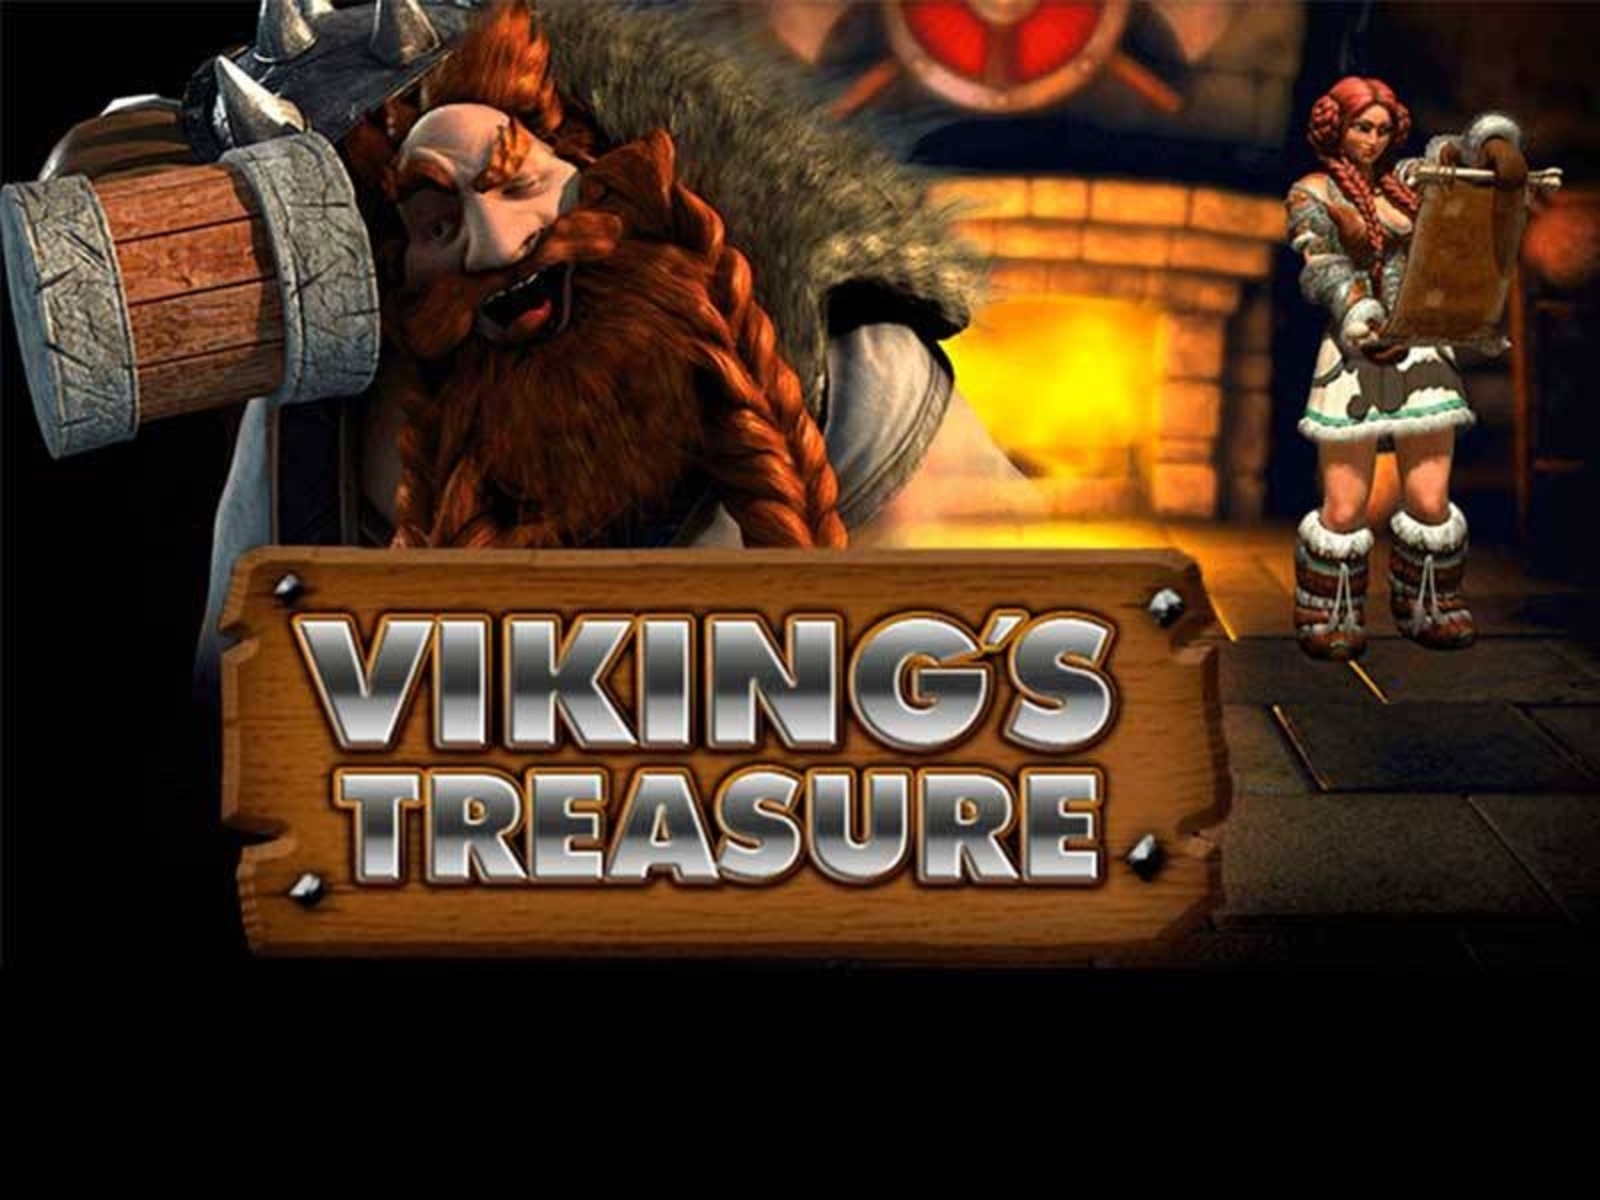 The Vikings Treasure Online Slot Demo Game by NetEnt